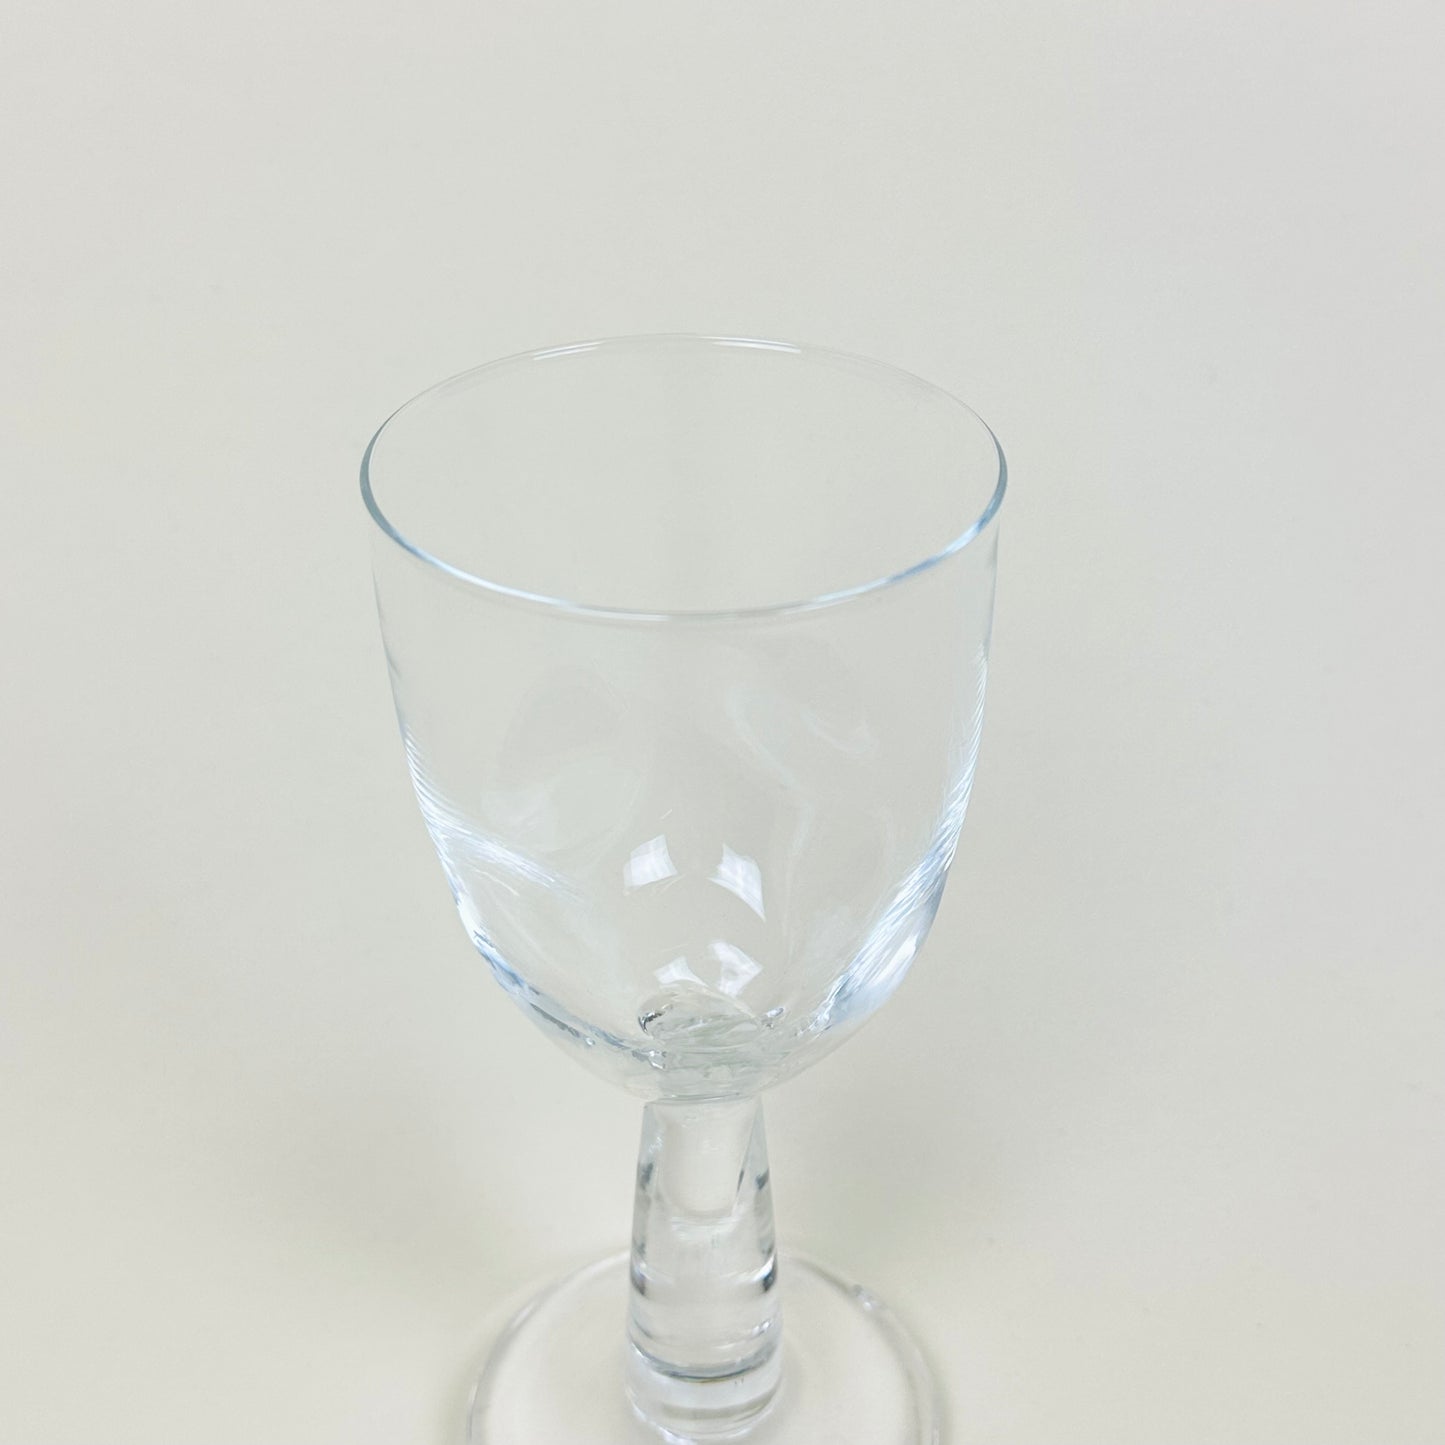 Wine glass by Silje Lindrup